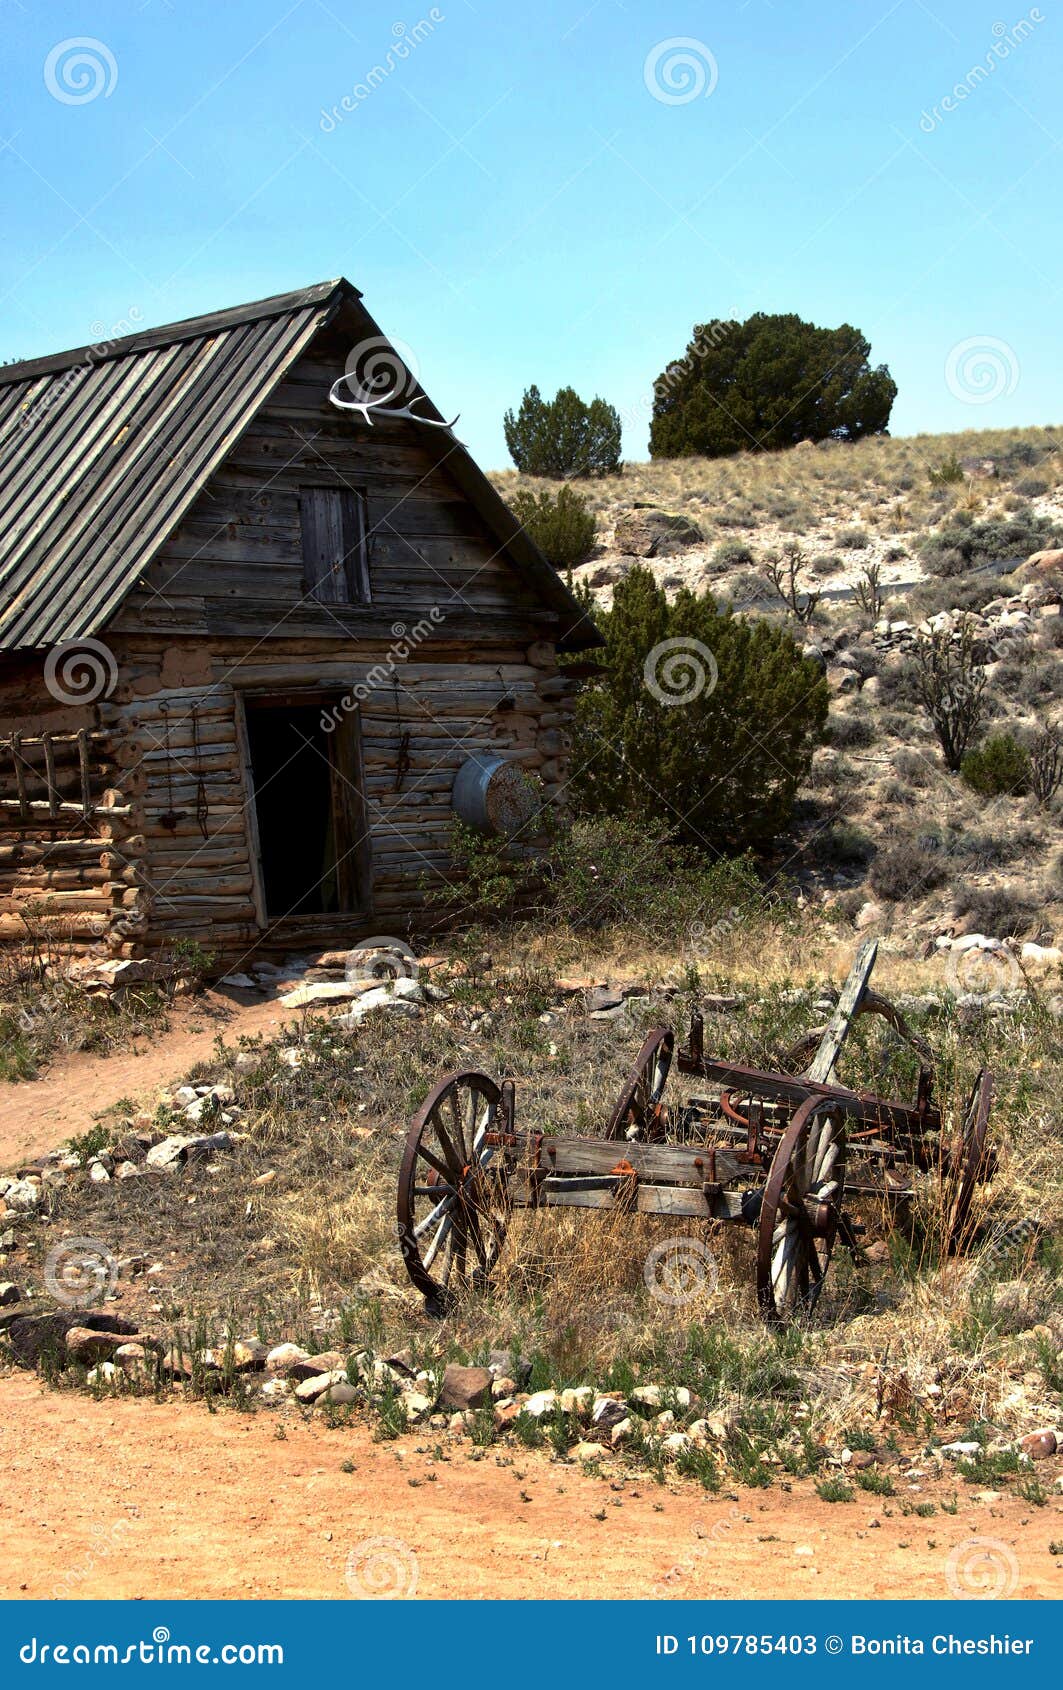 trapper`s cabin with wagon